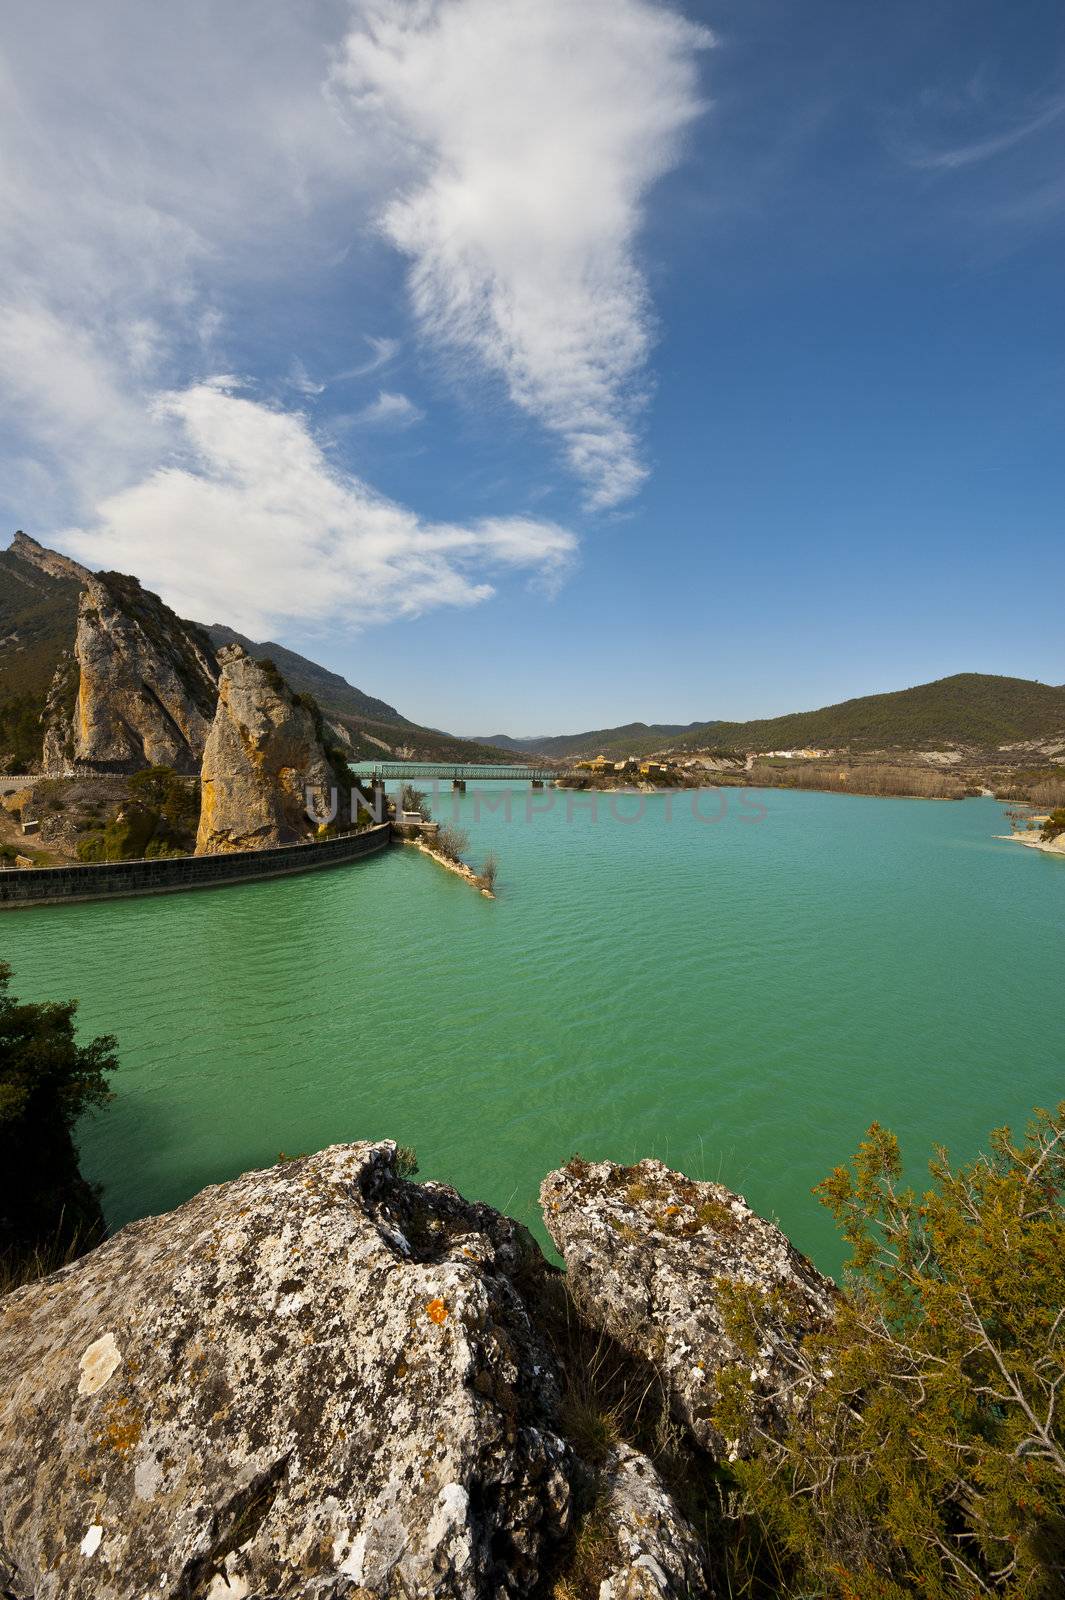 The Concrete Dam on the River Aragón, Spain